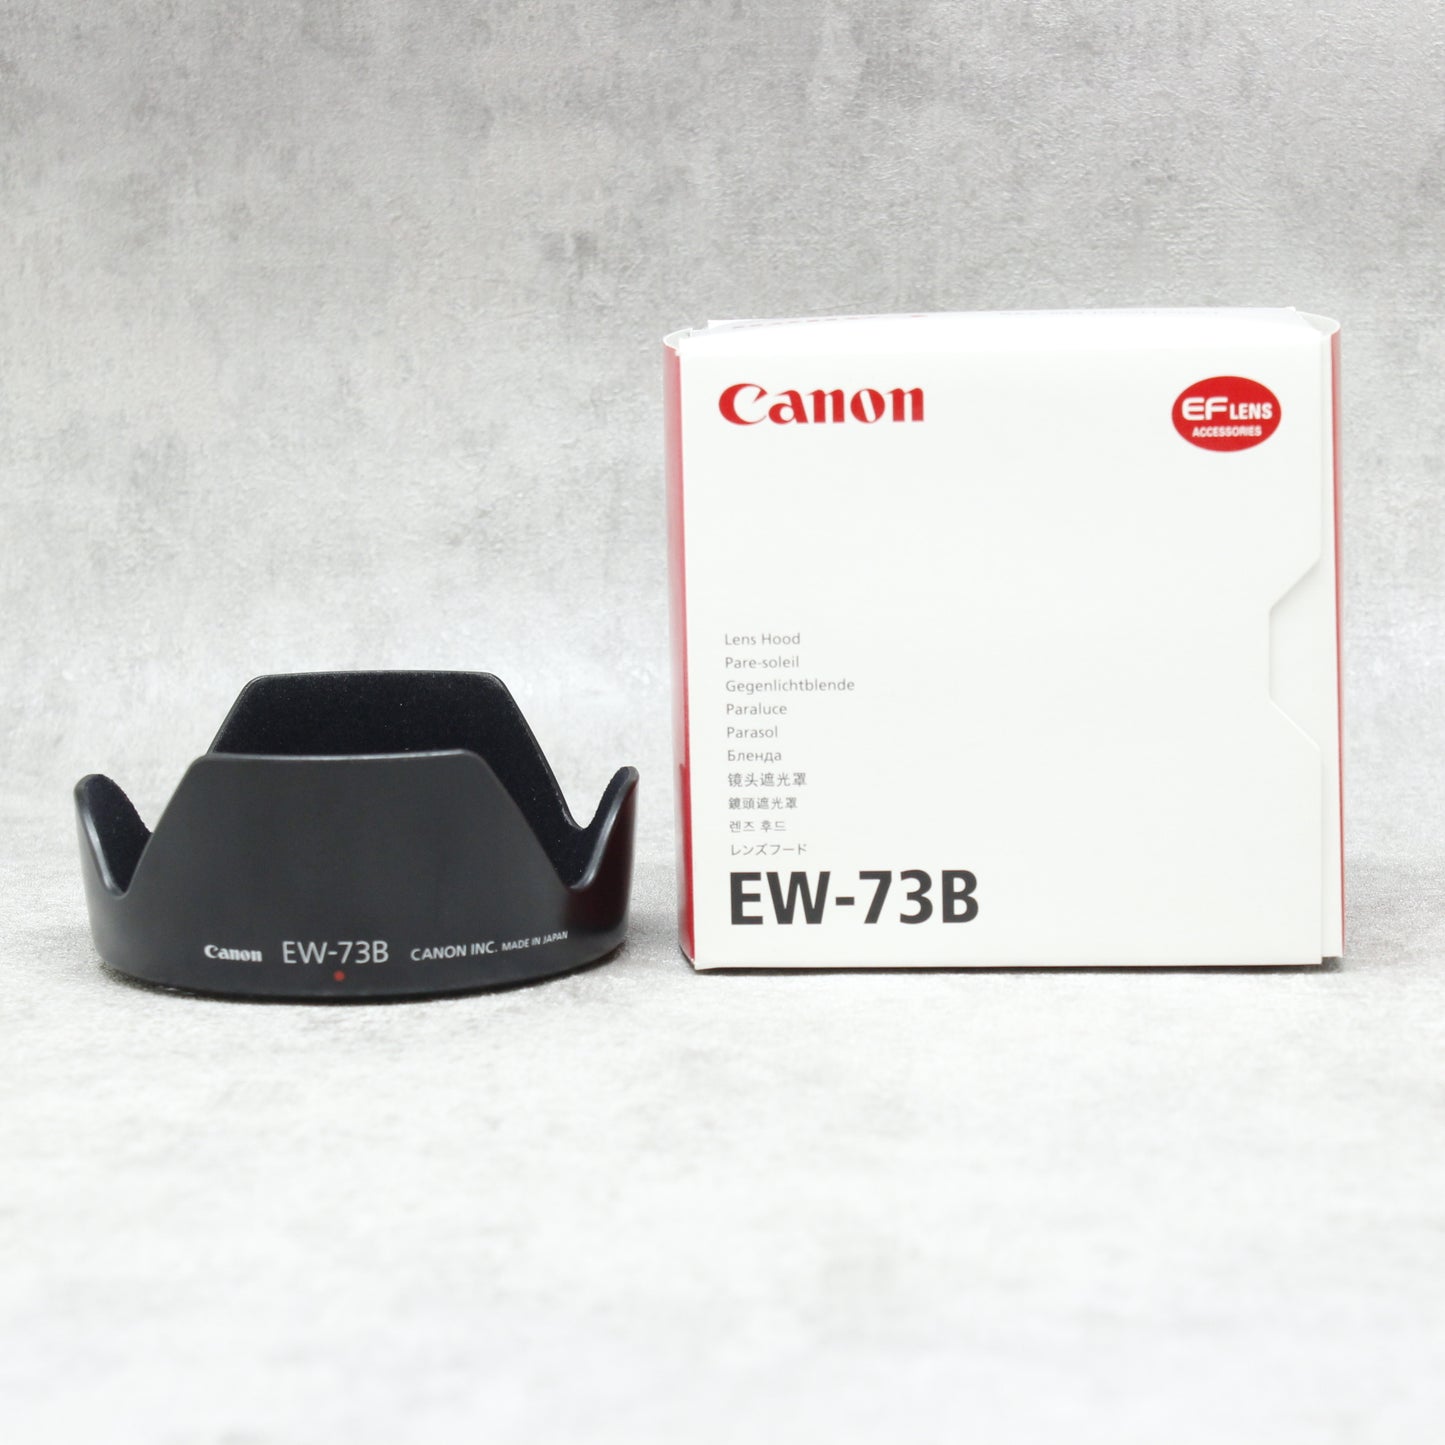 中古品 Canon EF-S 18-135mm F3.5-5.6 IS STM ☆8月19日(金)のYouTube生配信でご紹介☆